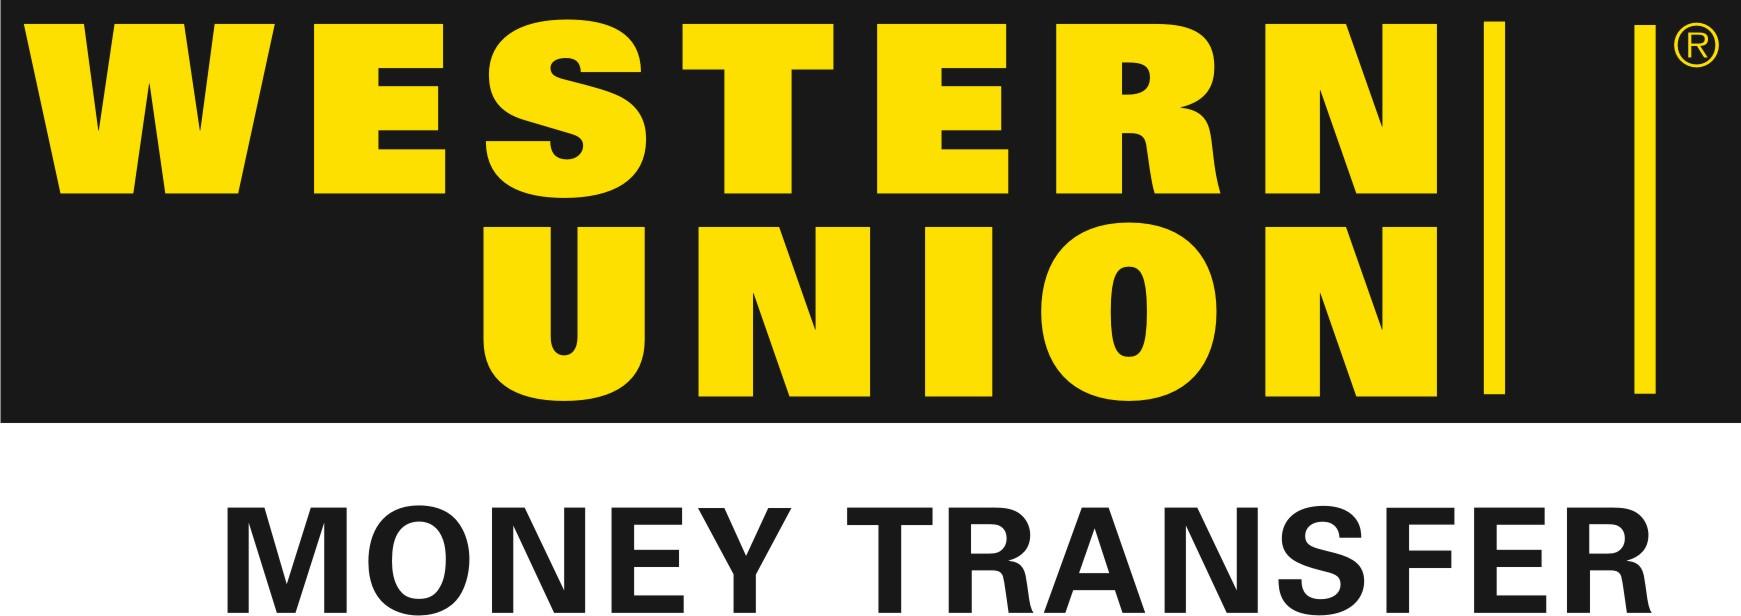 Alternative Western Union